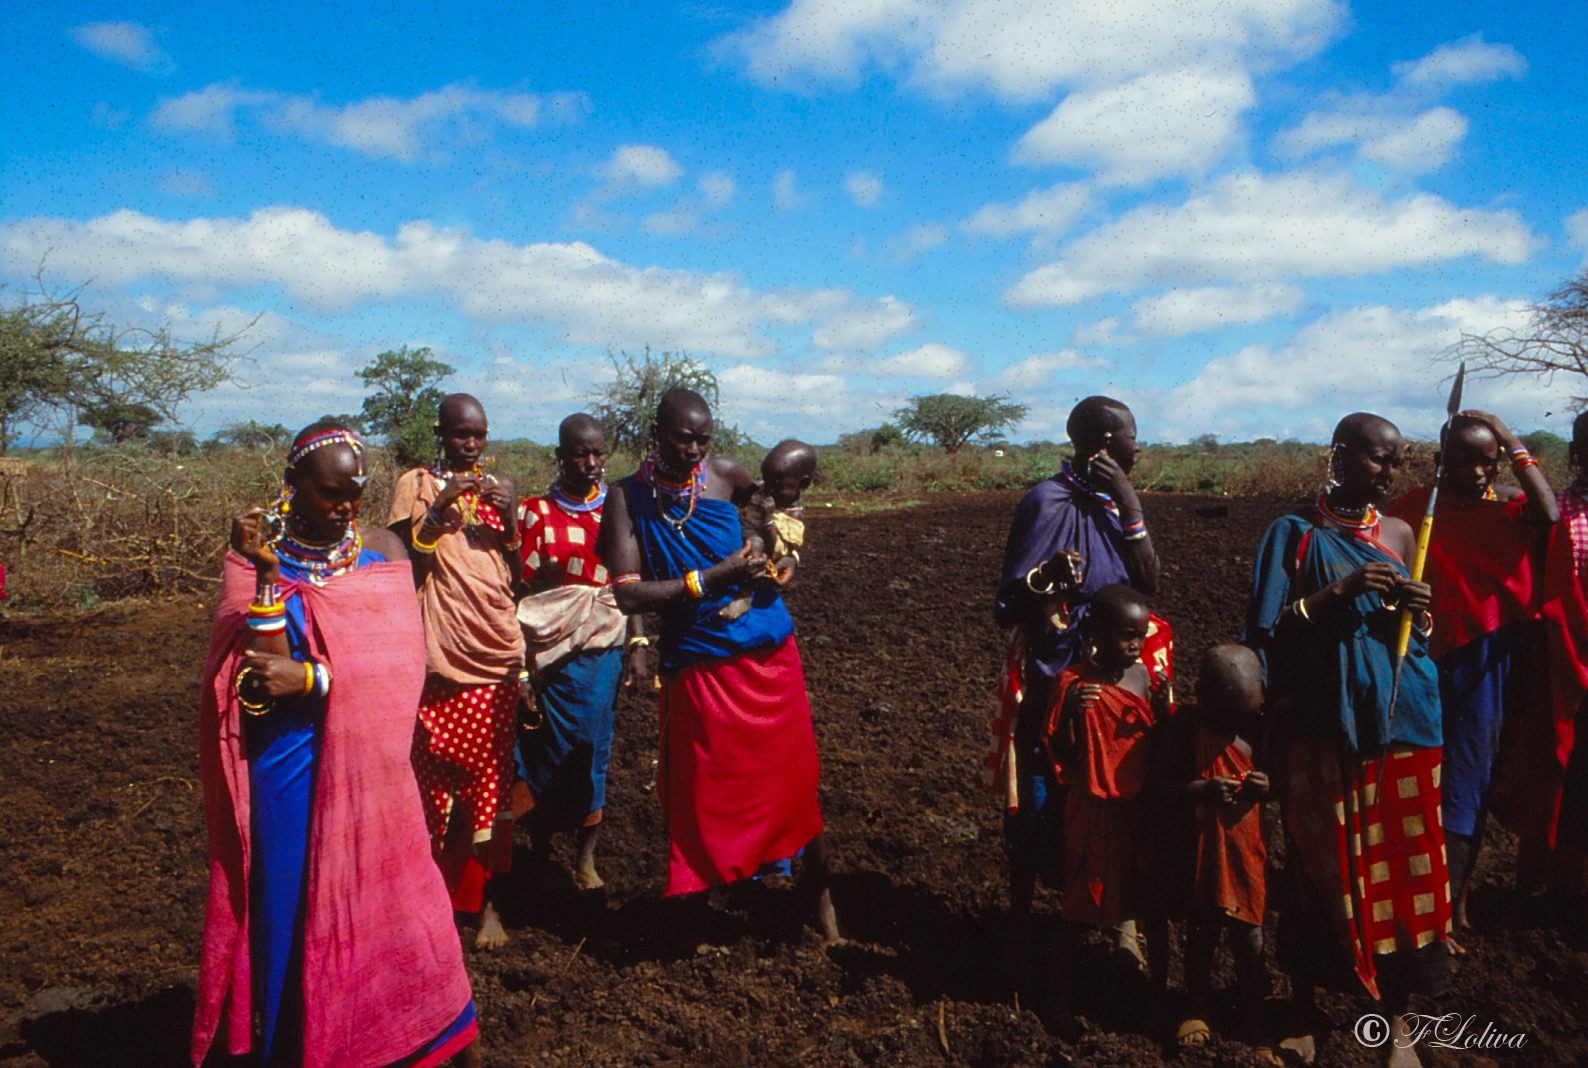 VECCHIE FOTO:KENIA 1990 /I MASAI